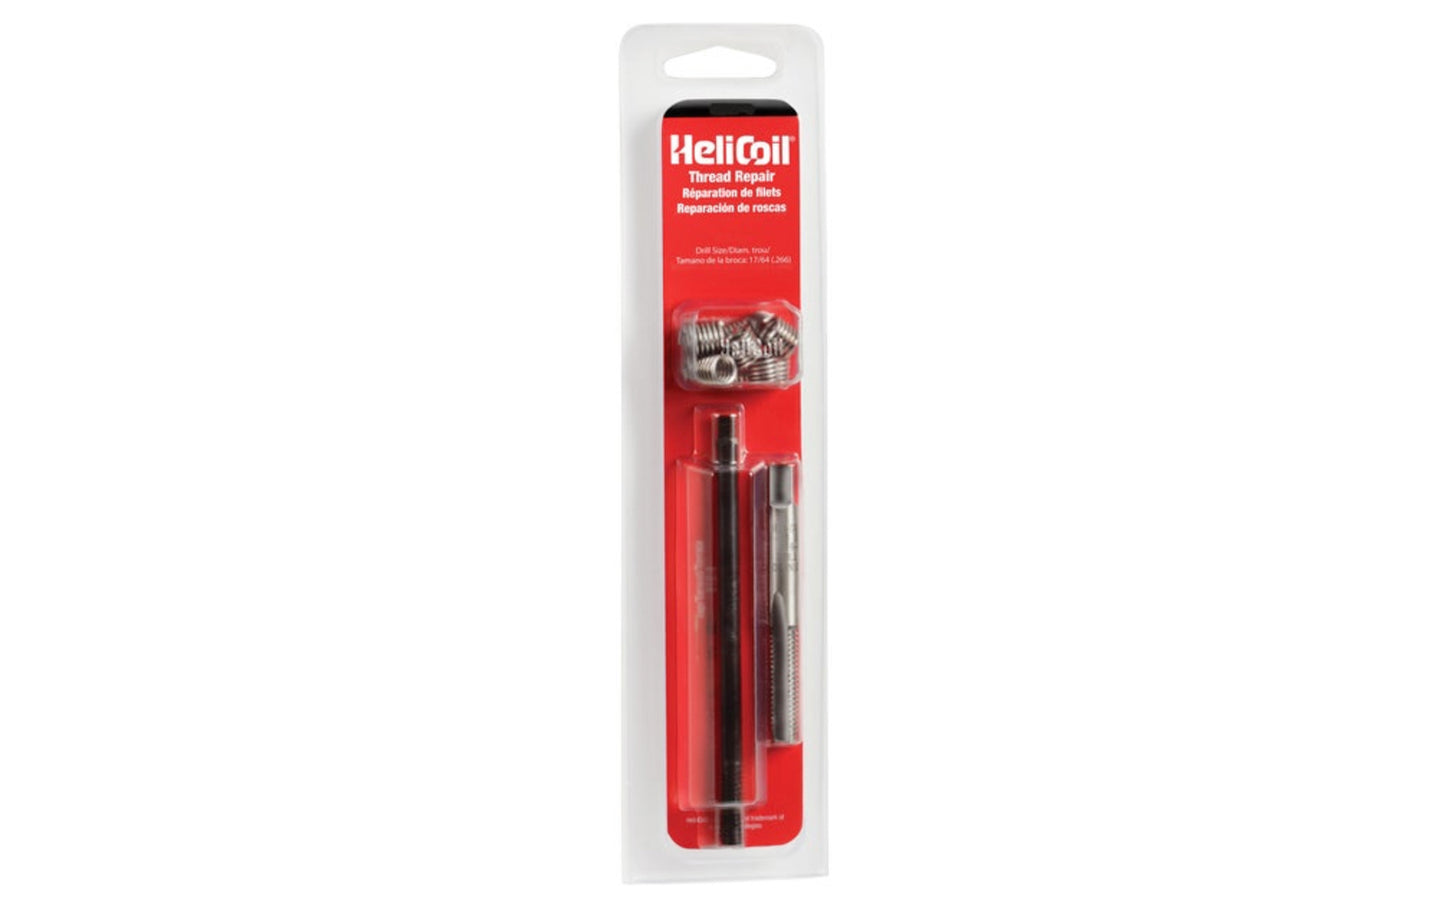 HeliCoil 5/16-18 Thread Repair Kit